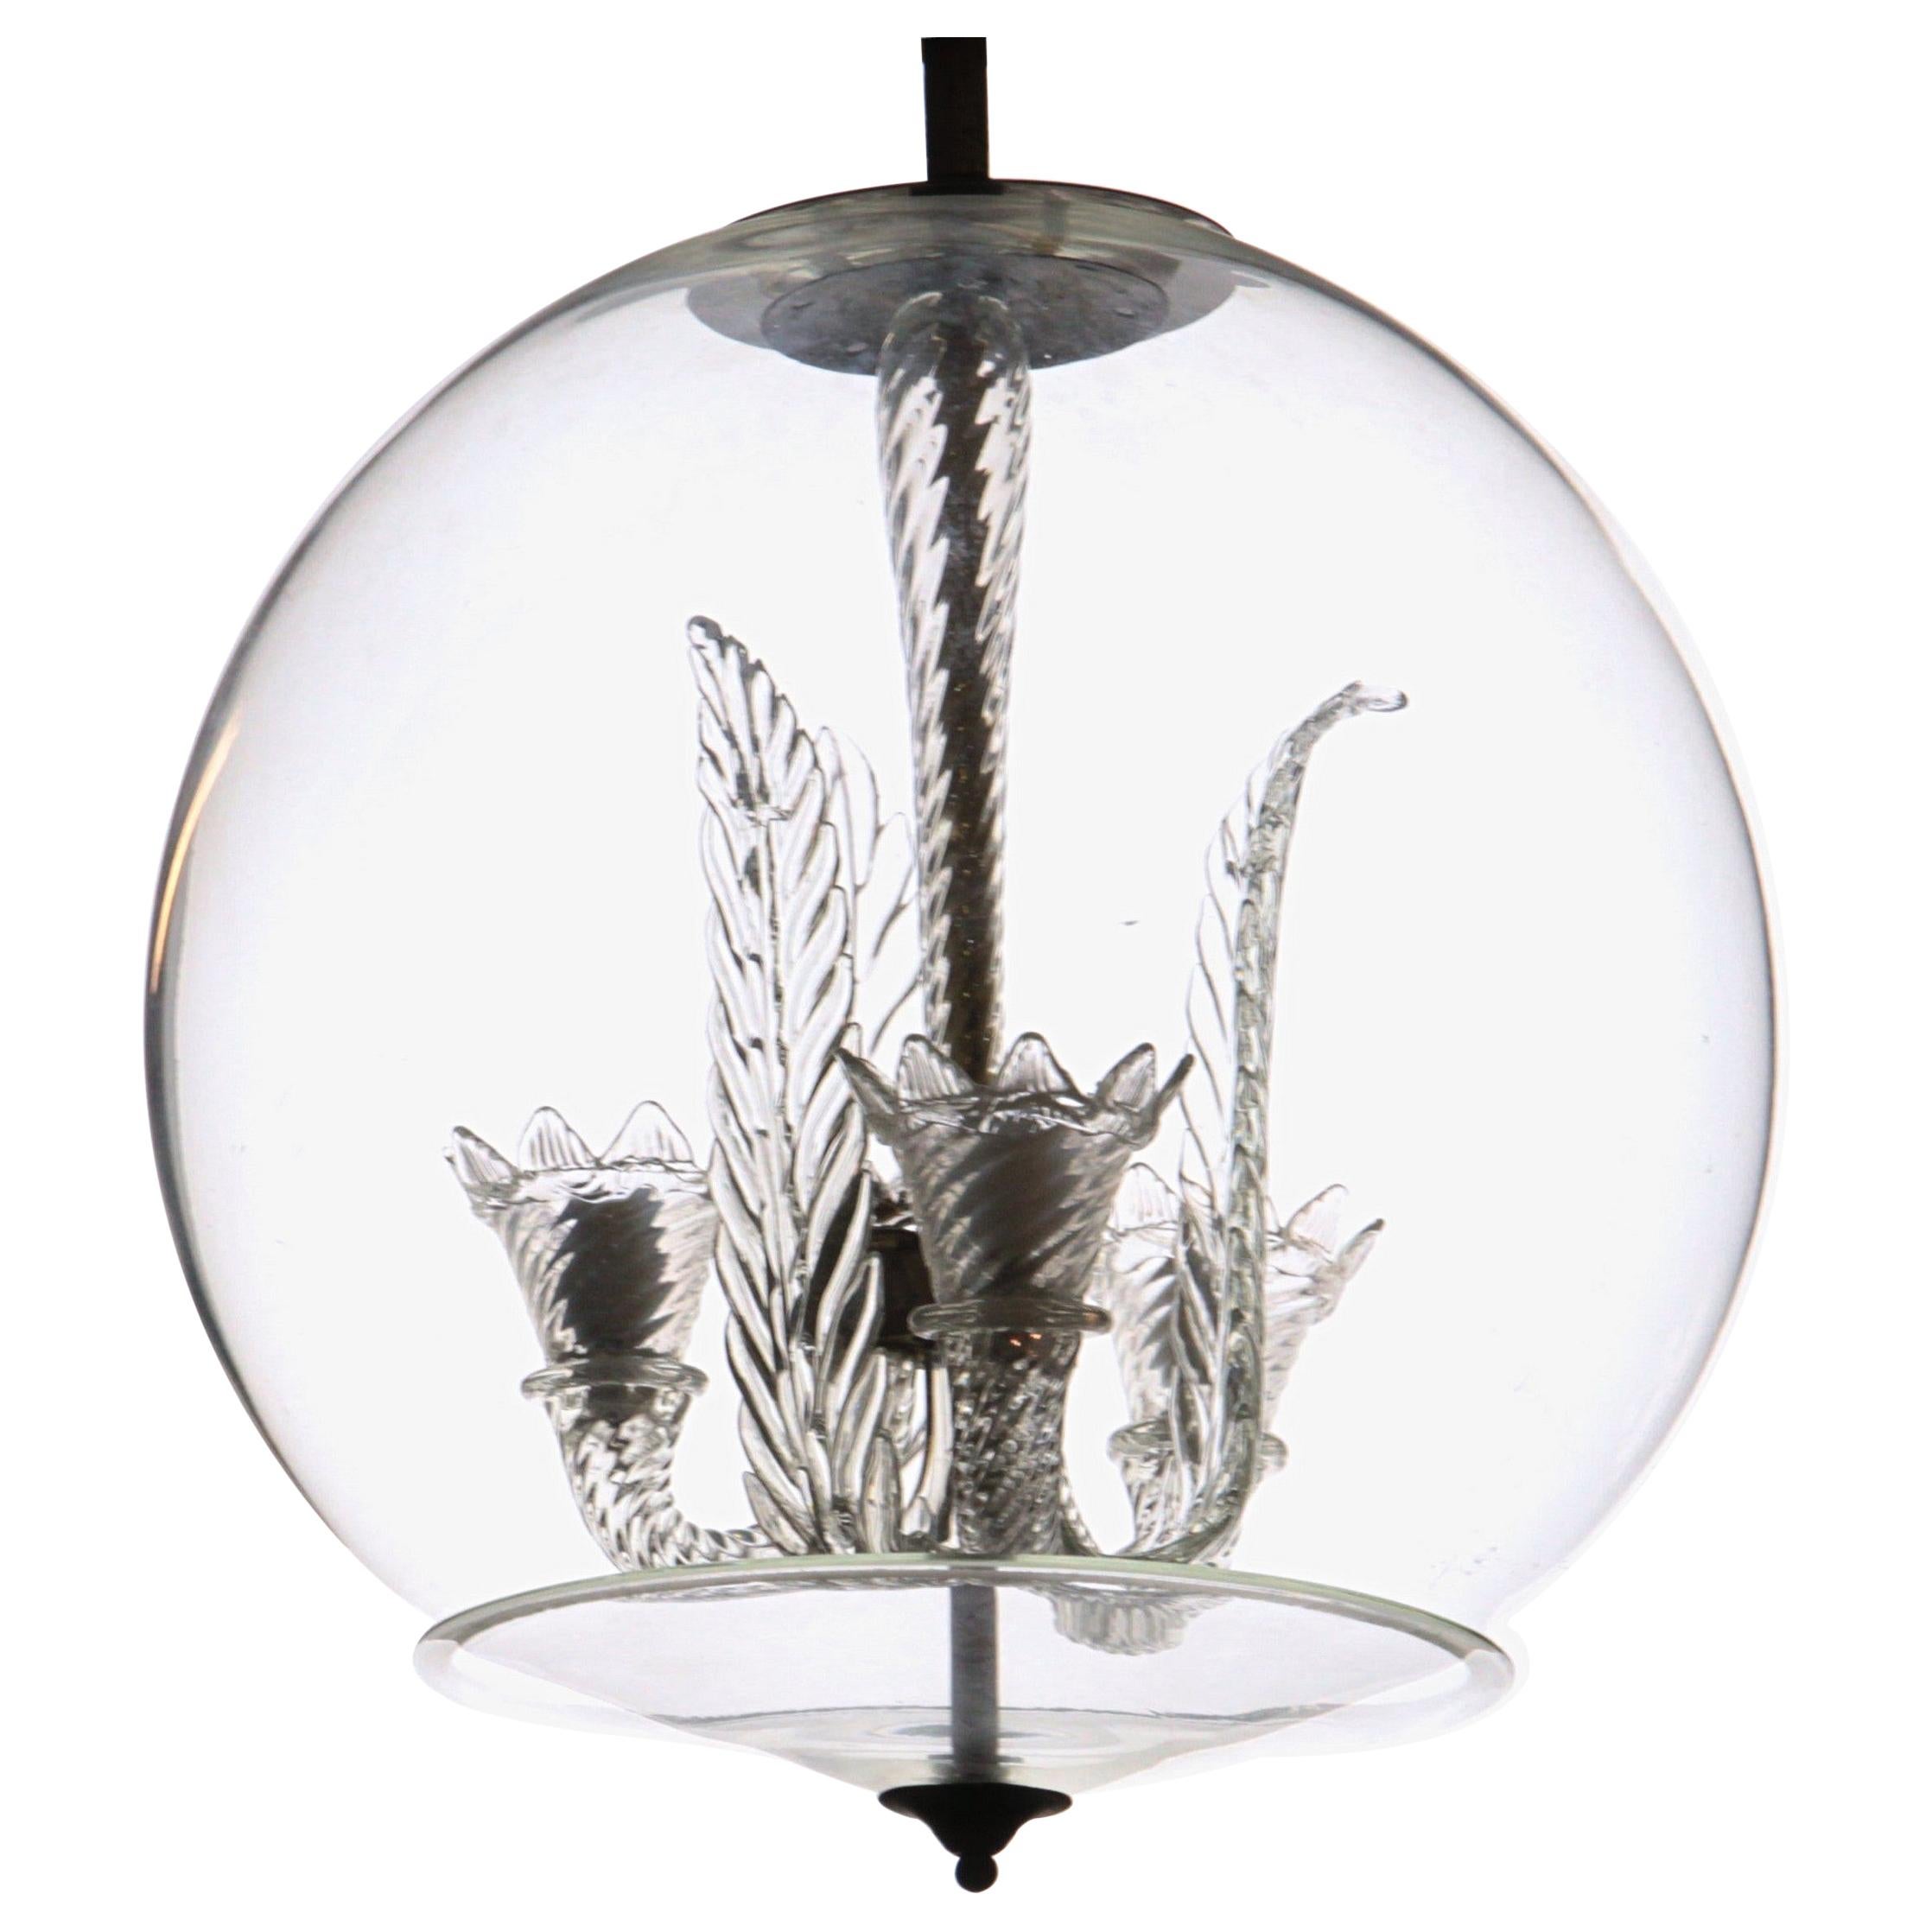 Tommaso Buzzi for Venini, Three Arms Chandelier Inside a Glass Sphere, 1930s